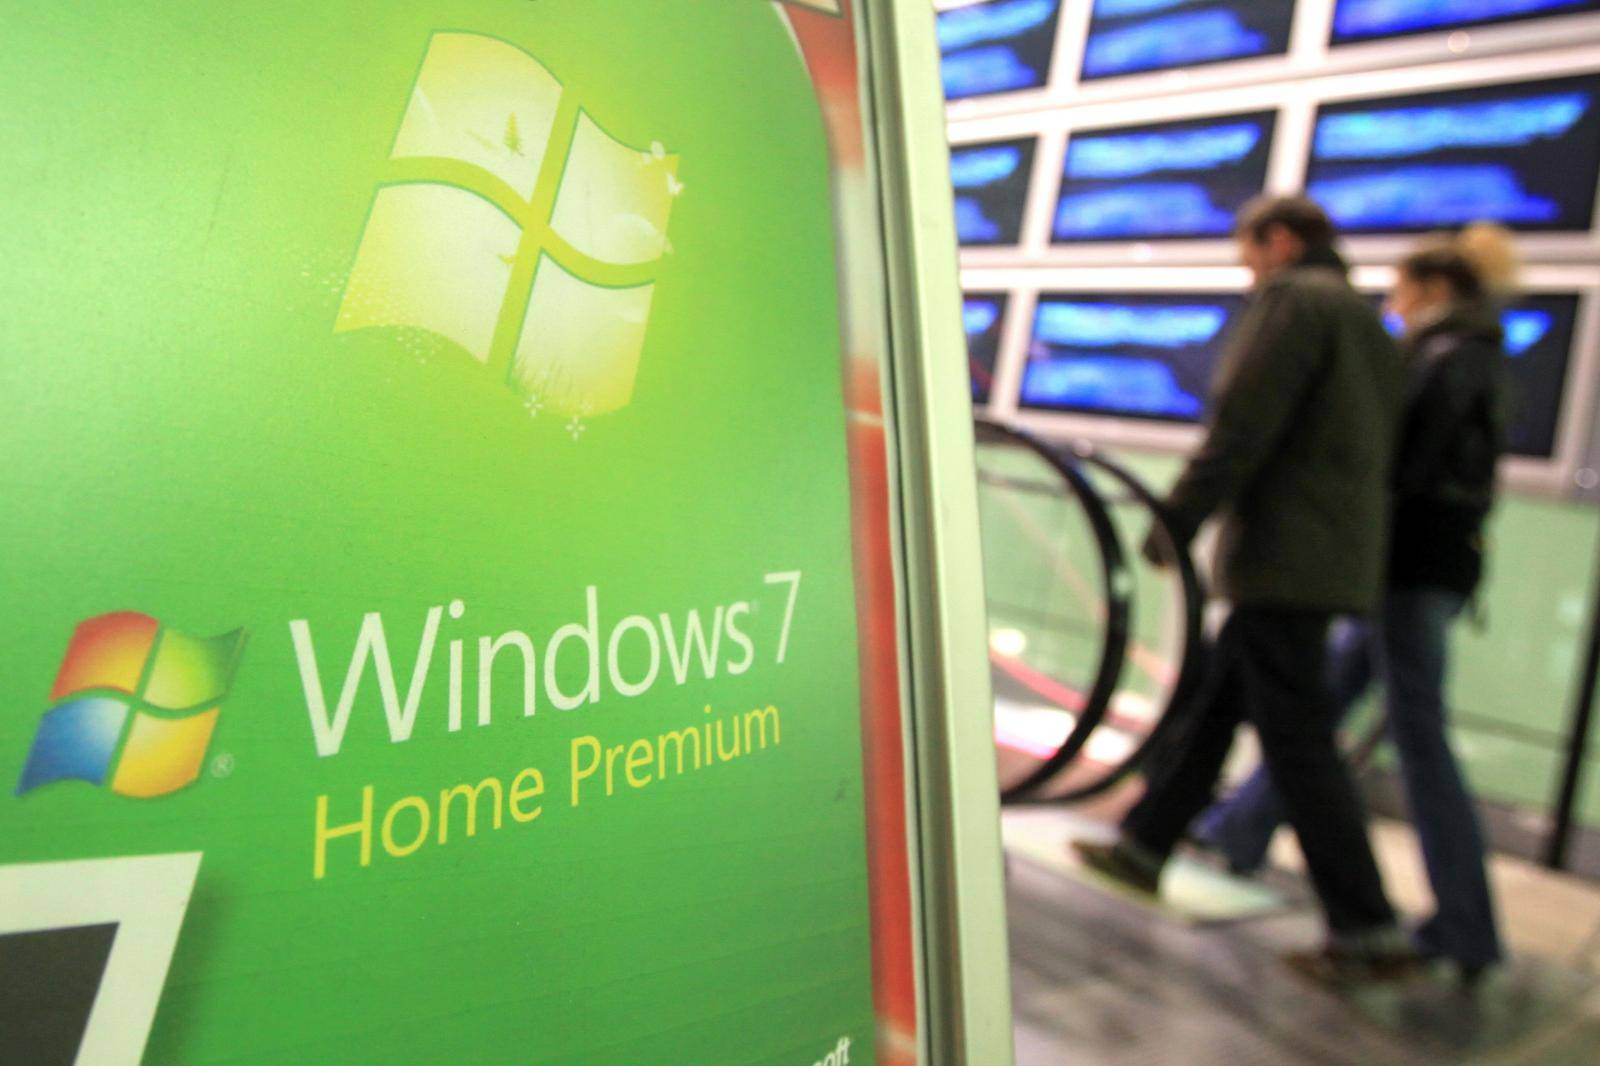 Sales launch of Windows 7